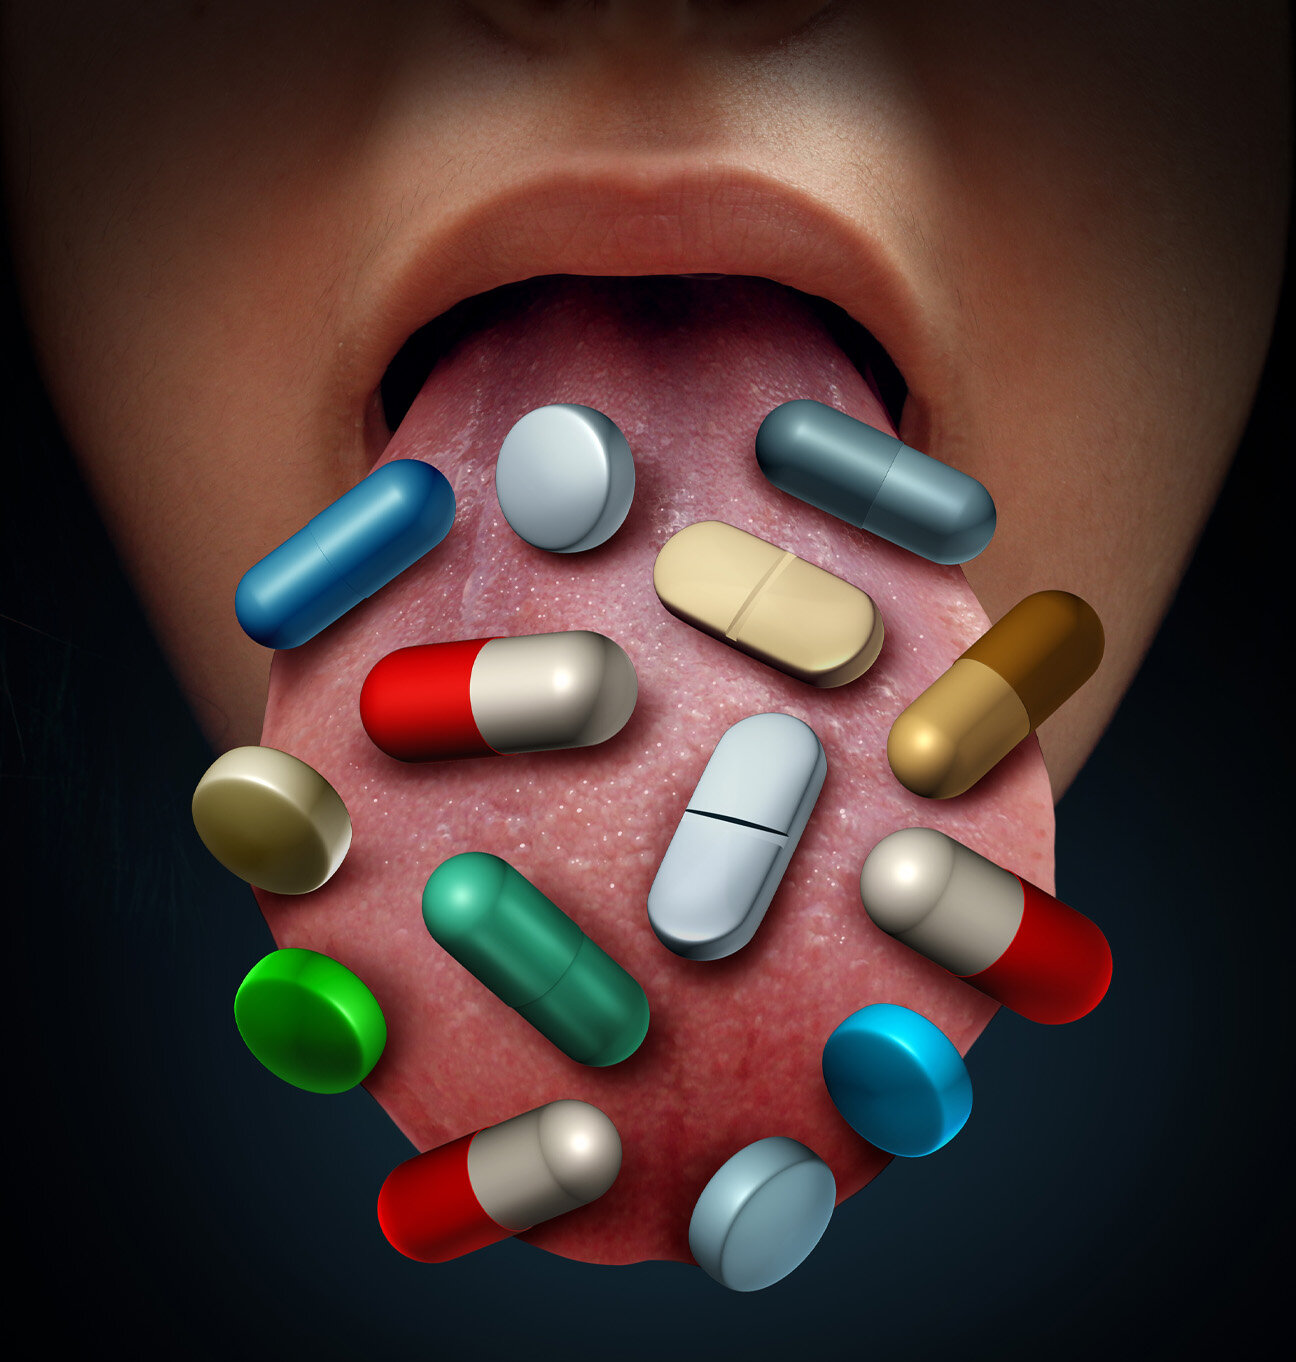 prescription+drug+addiction+.jpg